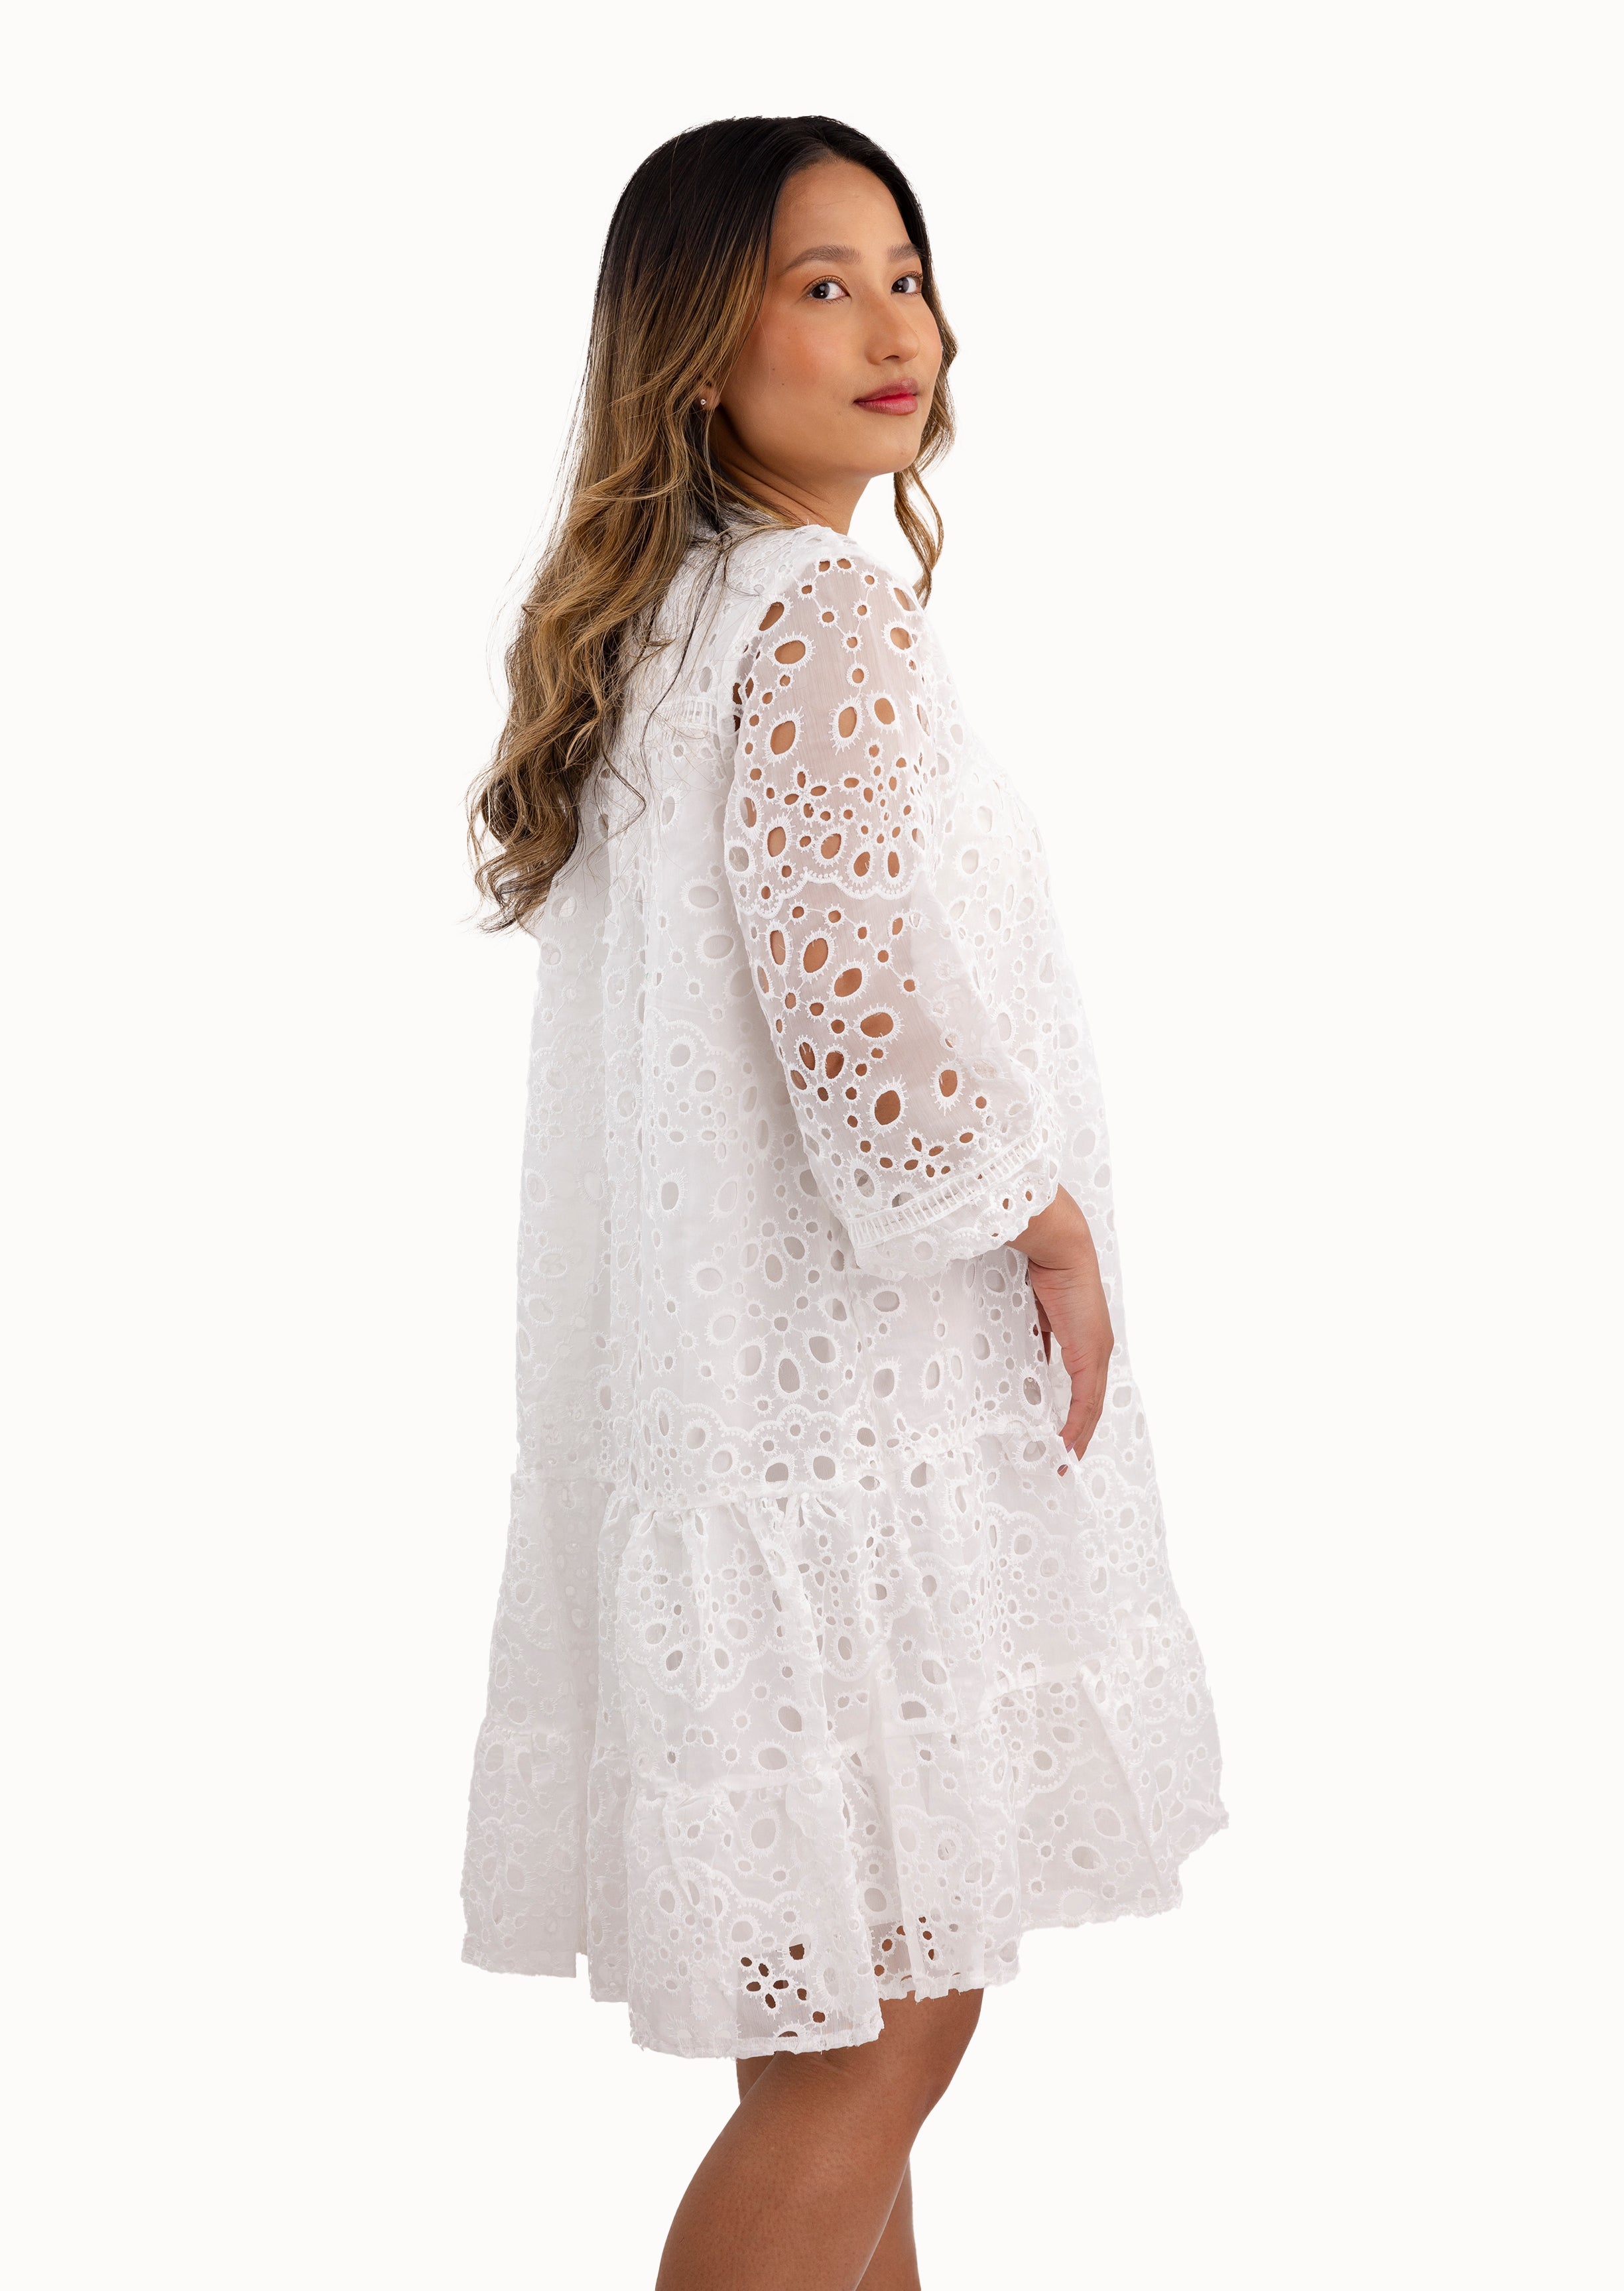 Shop Bereal Audrey White Dress